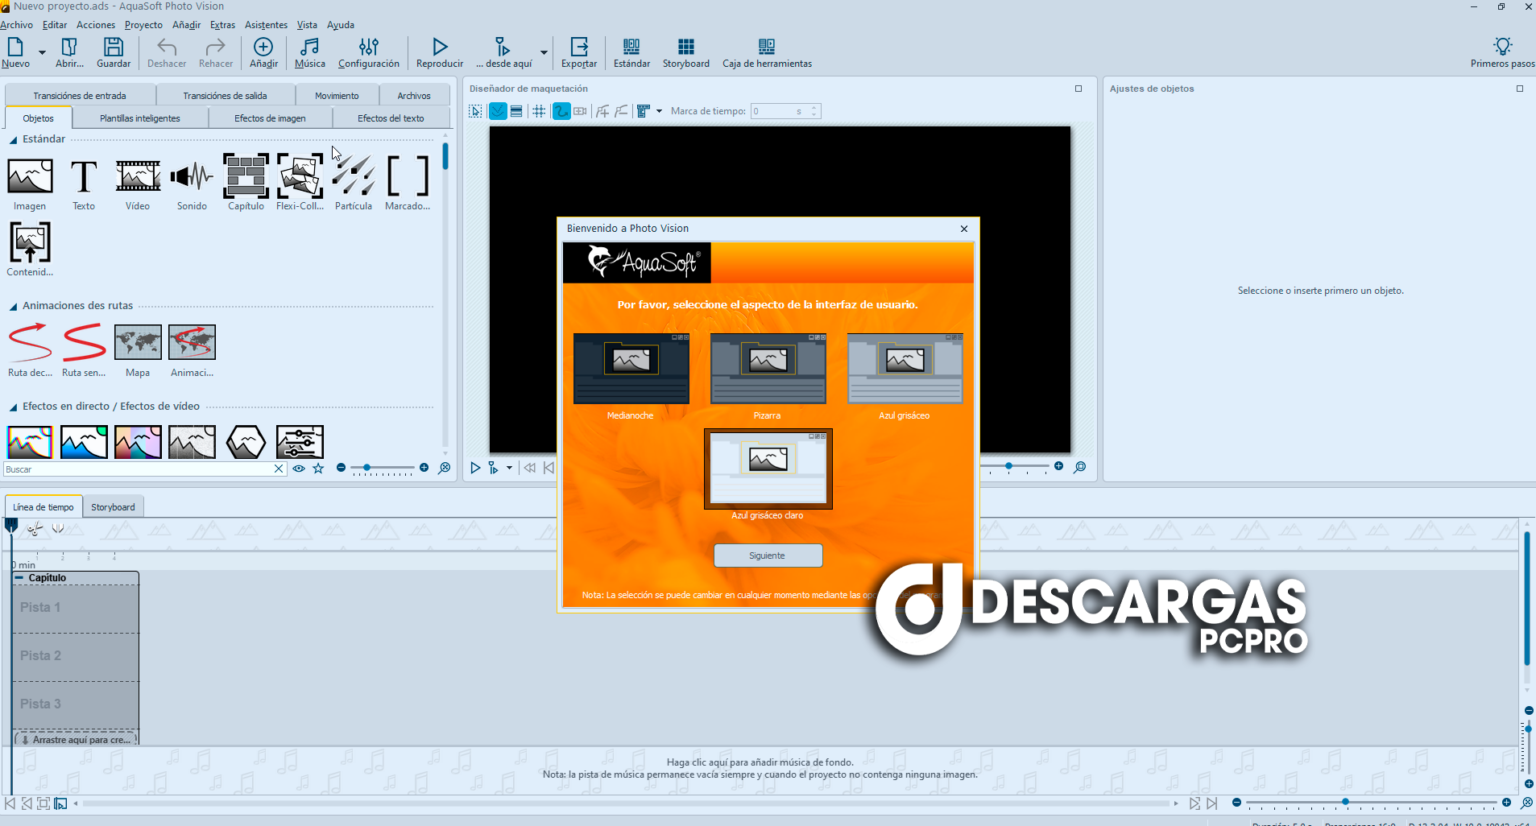 instal the last version for ios AquaSoft Video Vision 14.2.11